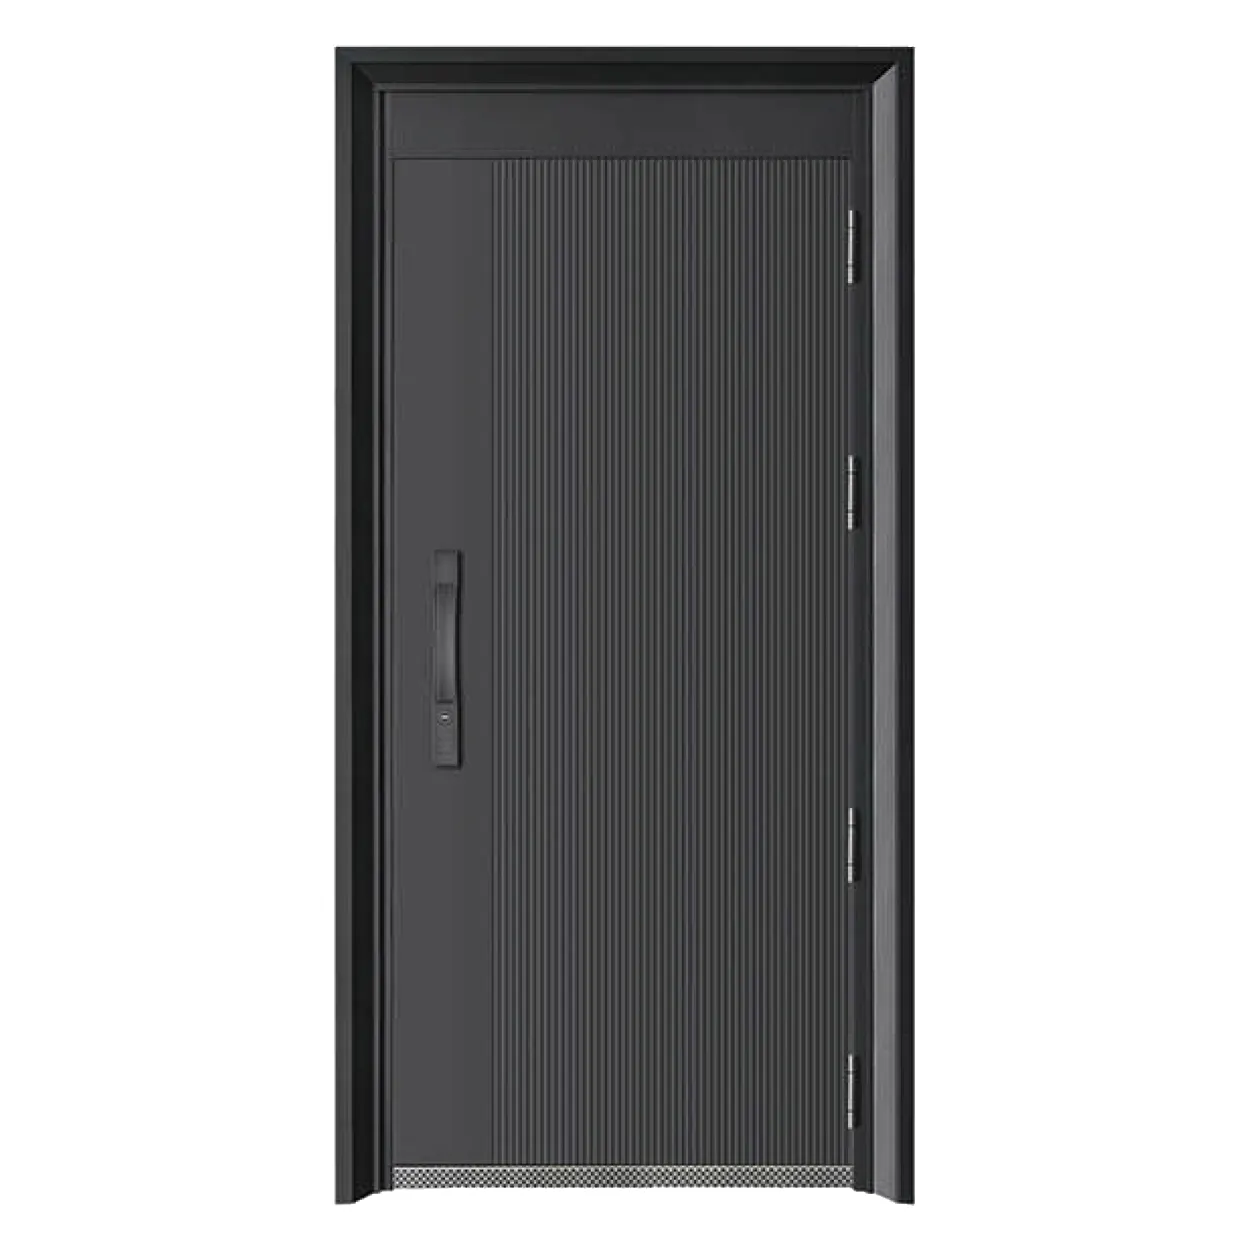 Hoja de puerta de 9cm de espesor para la entrada del hogar, puerta de acero de alta calidad en China